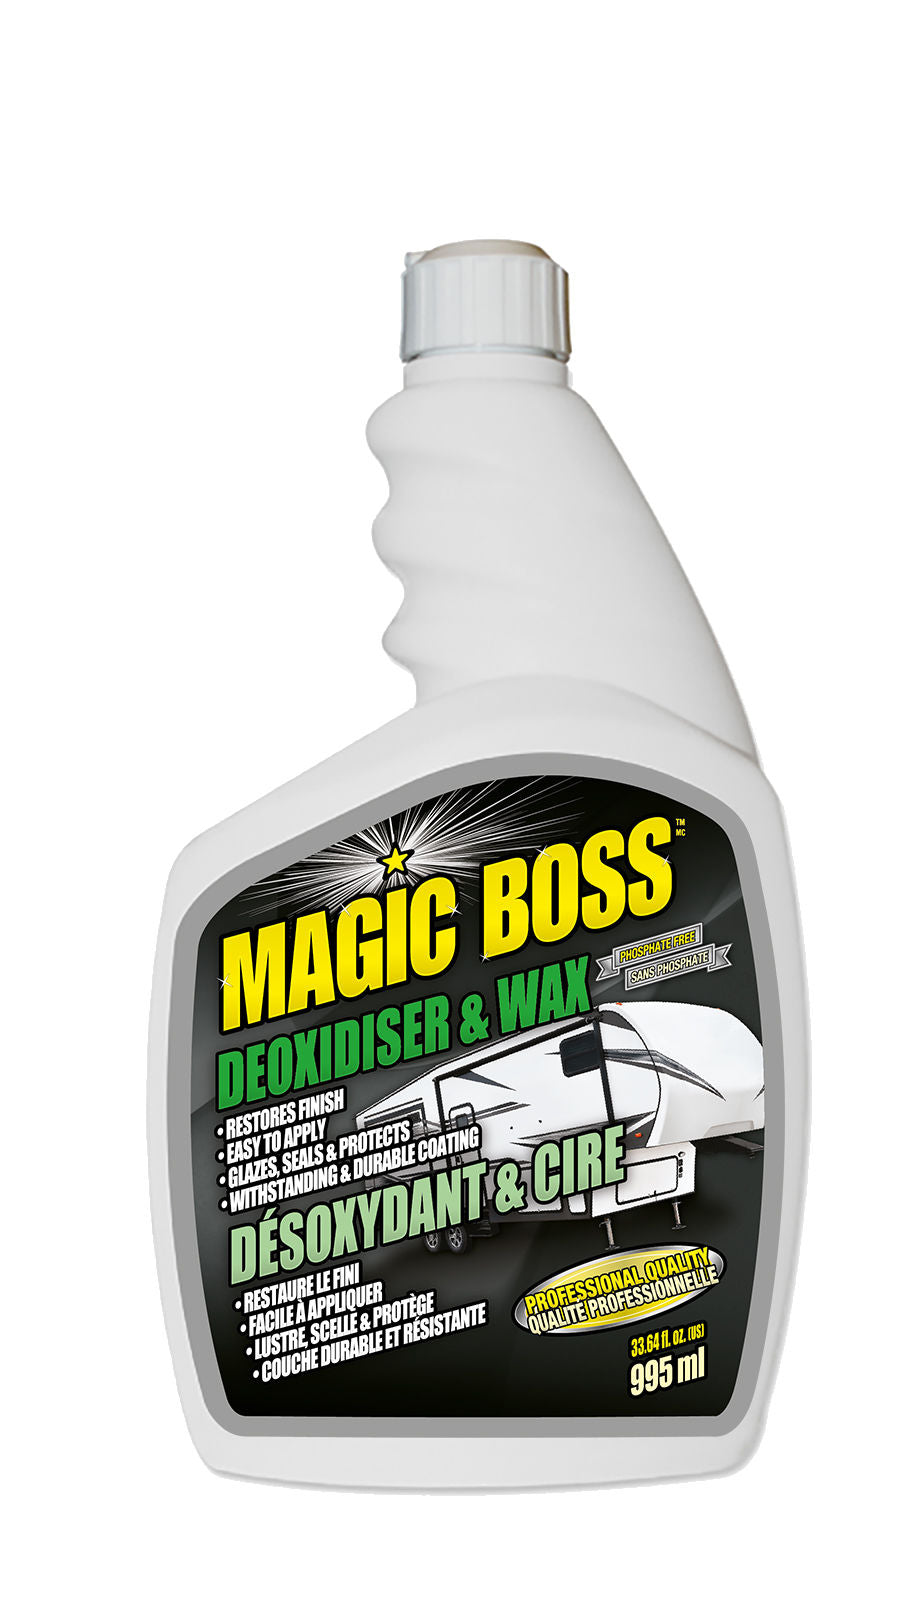 Magic Boss 2601 - Deoxidiser & Wax (995 ml)